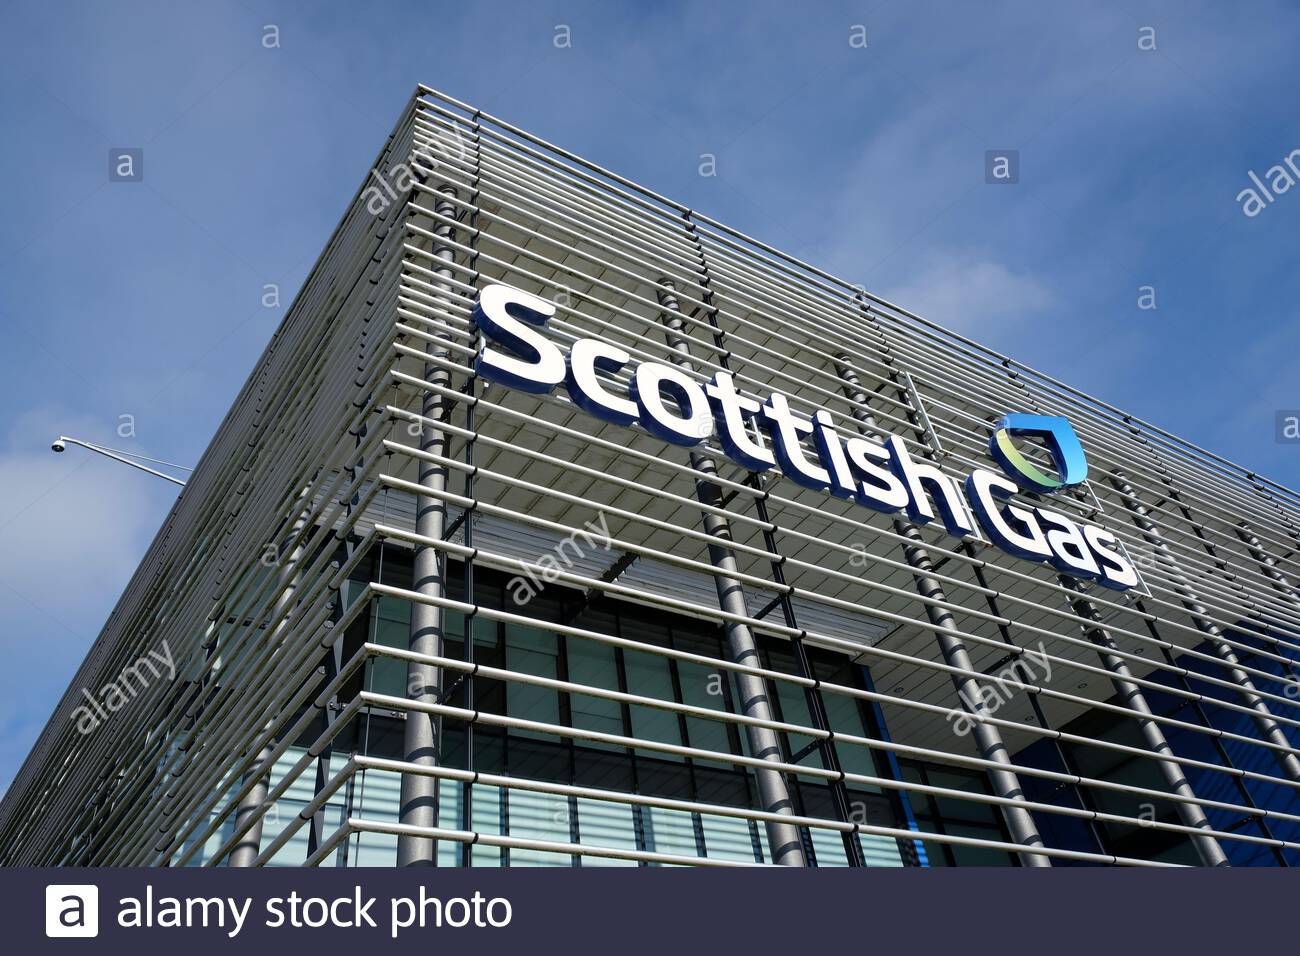 Scottish Gas headquarters, Granton Edinburgh, Scotland Stock Photo